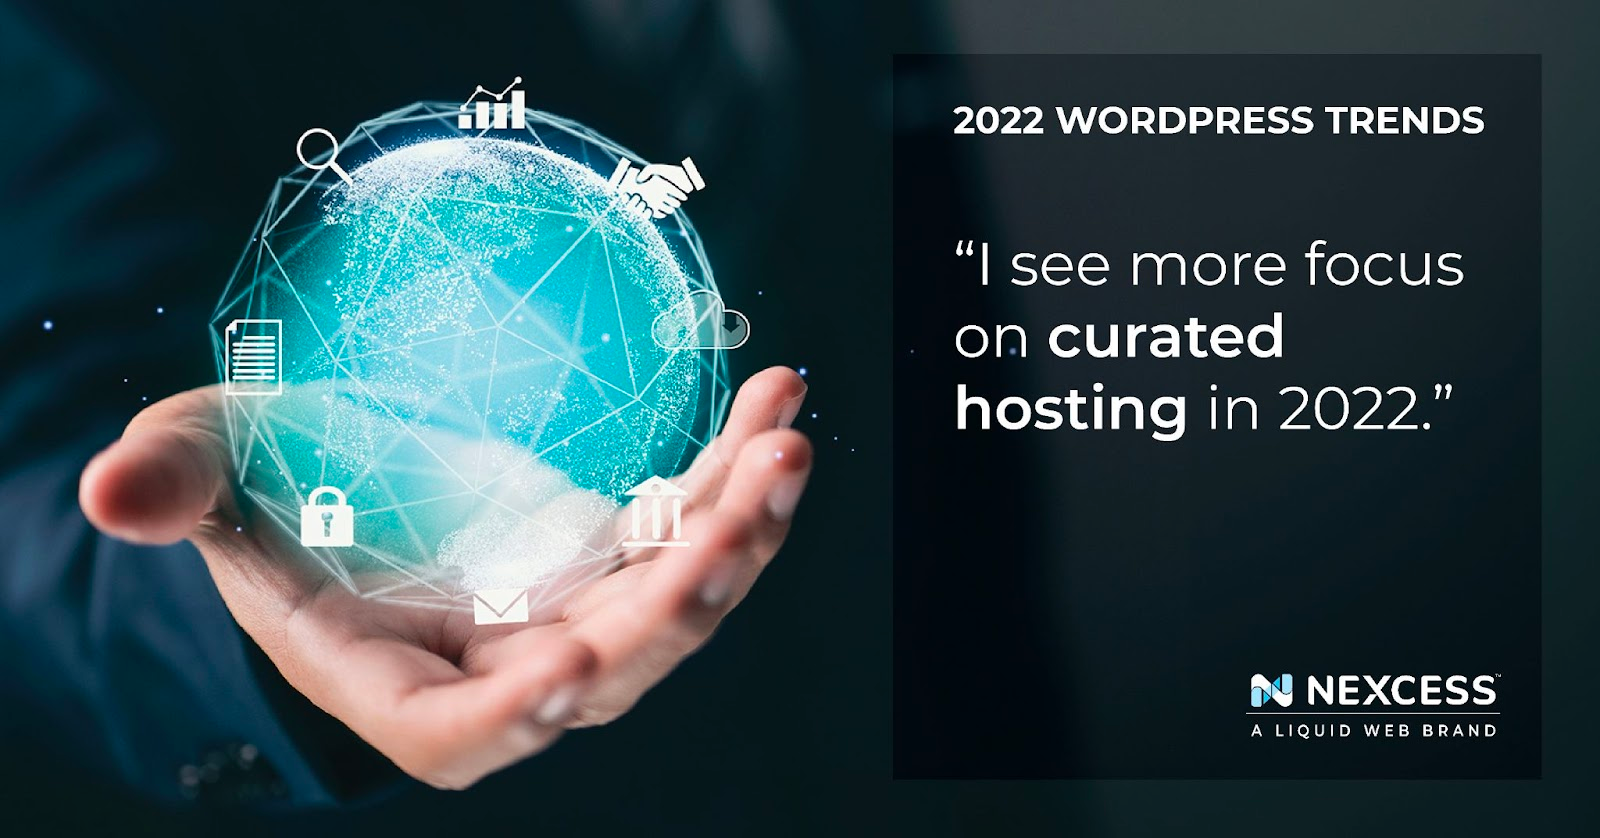 Curating hosting is a big WordPress trend